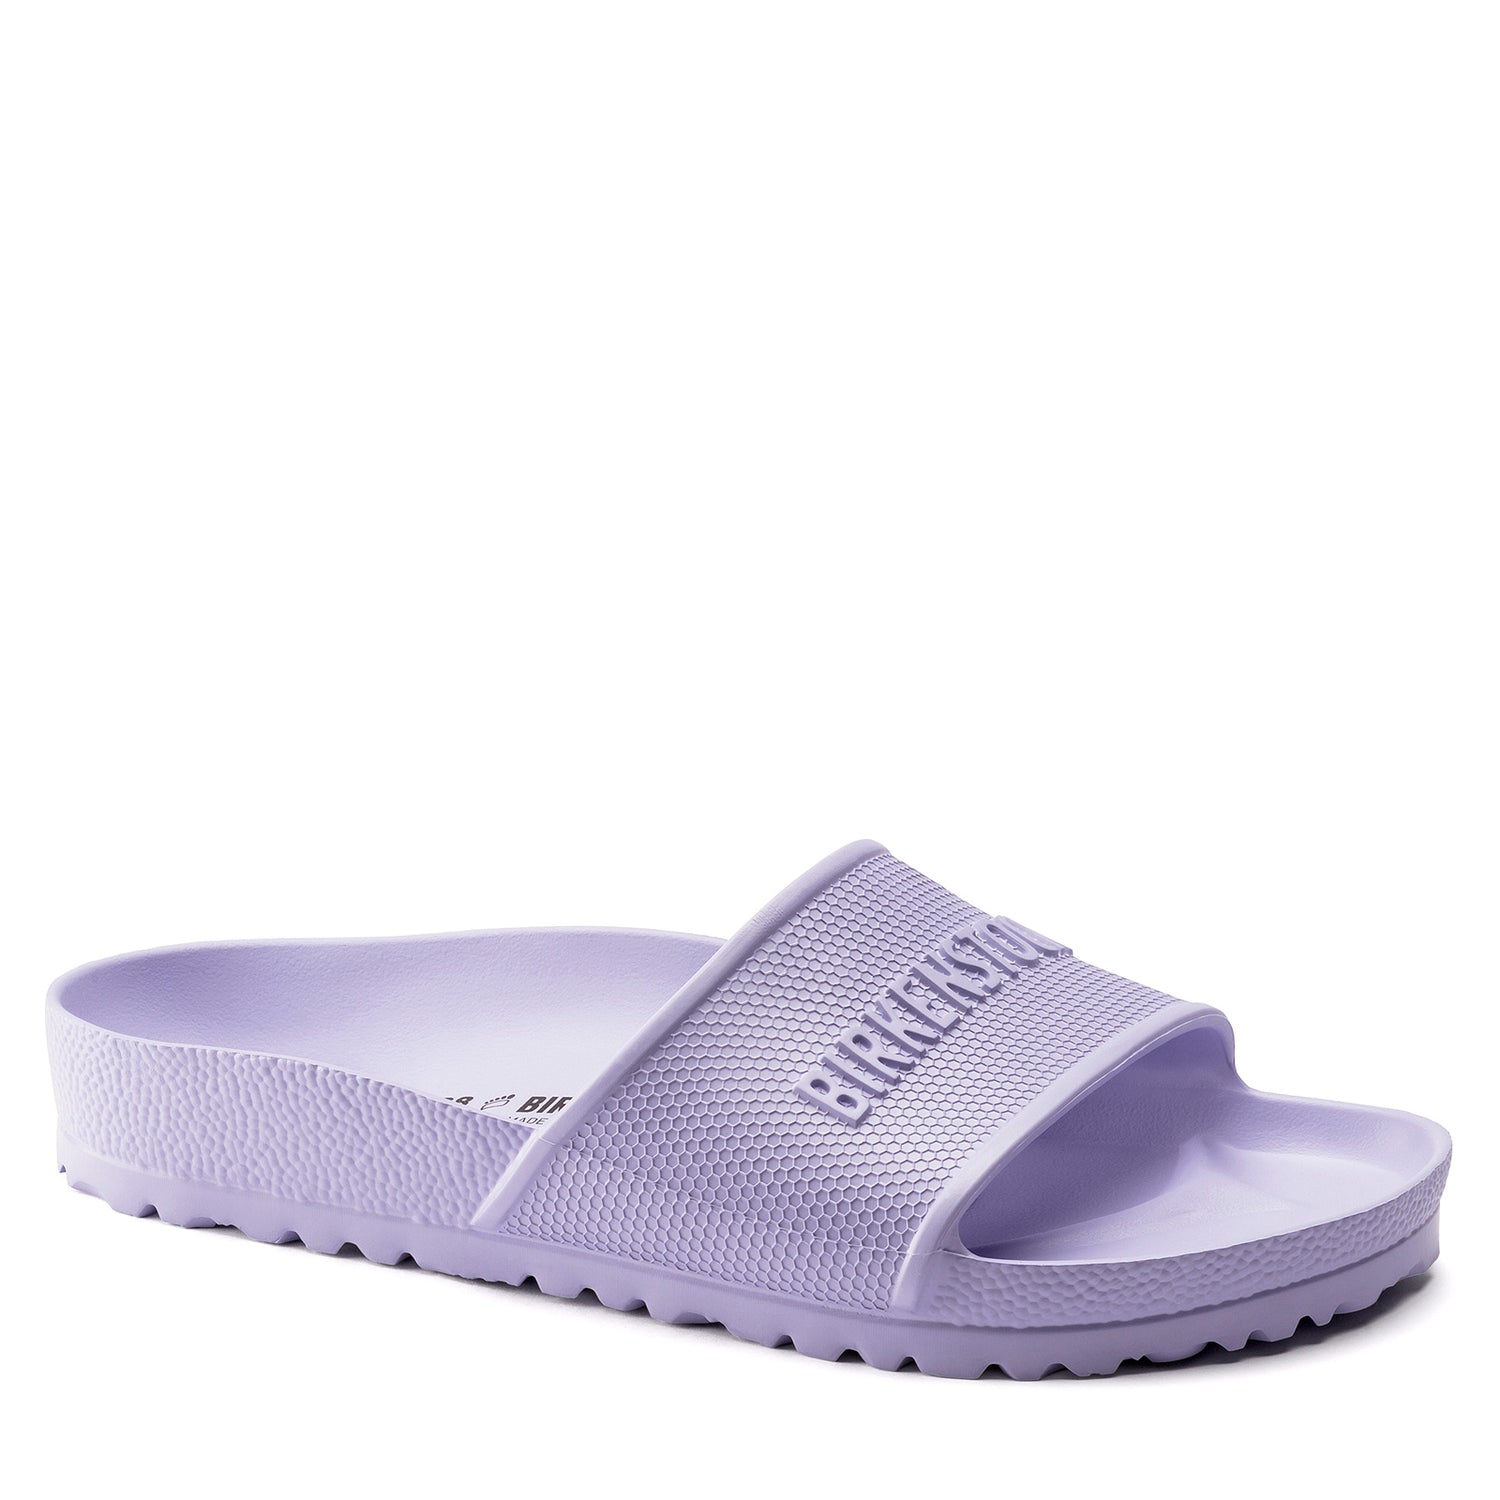 Peltz Shoes  Women's Birkenstock Barbados EVA Sandal - Regular Fit PURPLE 1017 055 R